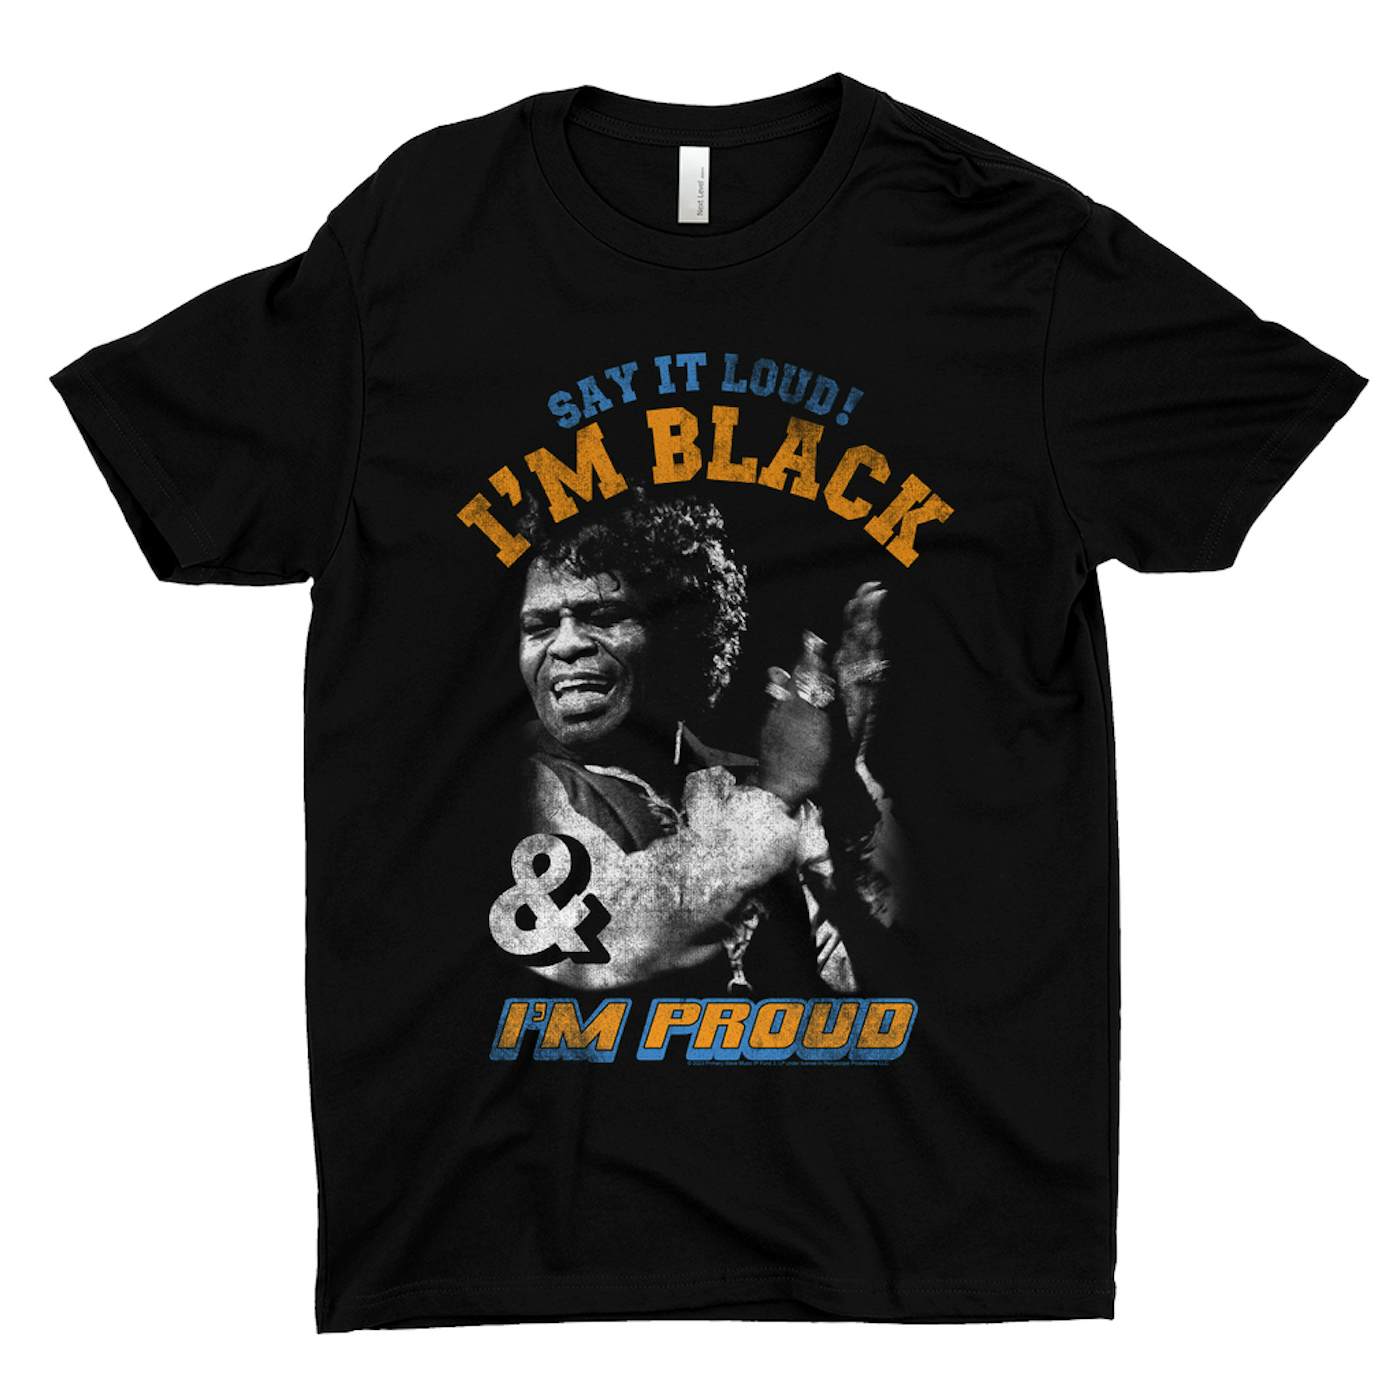 James Brown T-Shirt | Say It Loud! Black And Proud Distressed James Brown Shirt